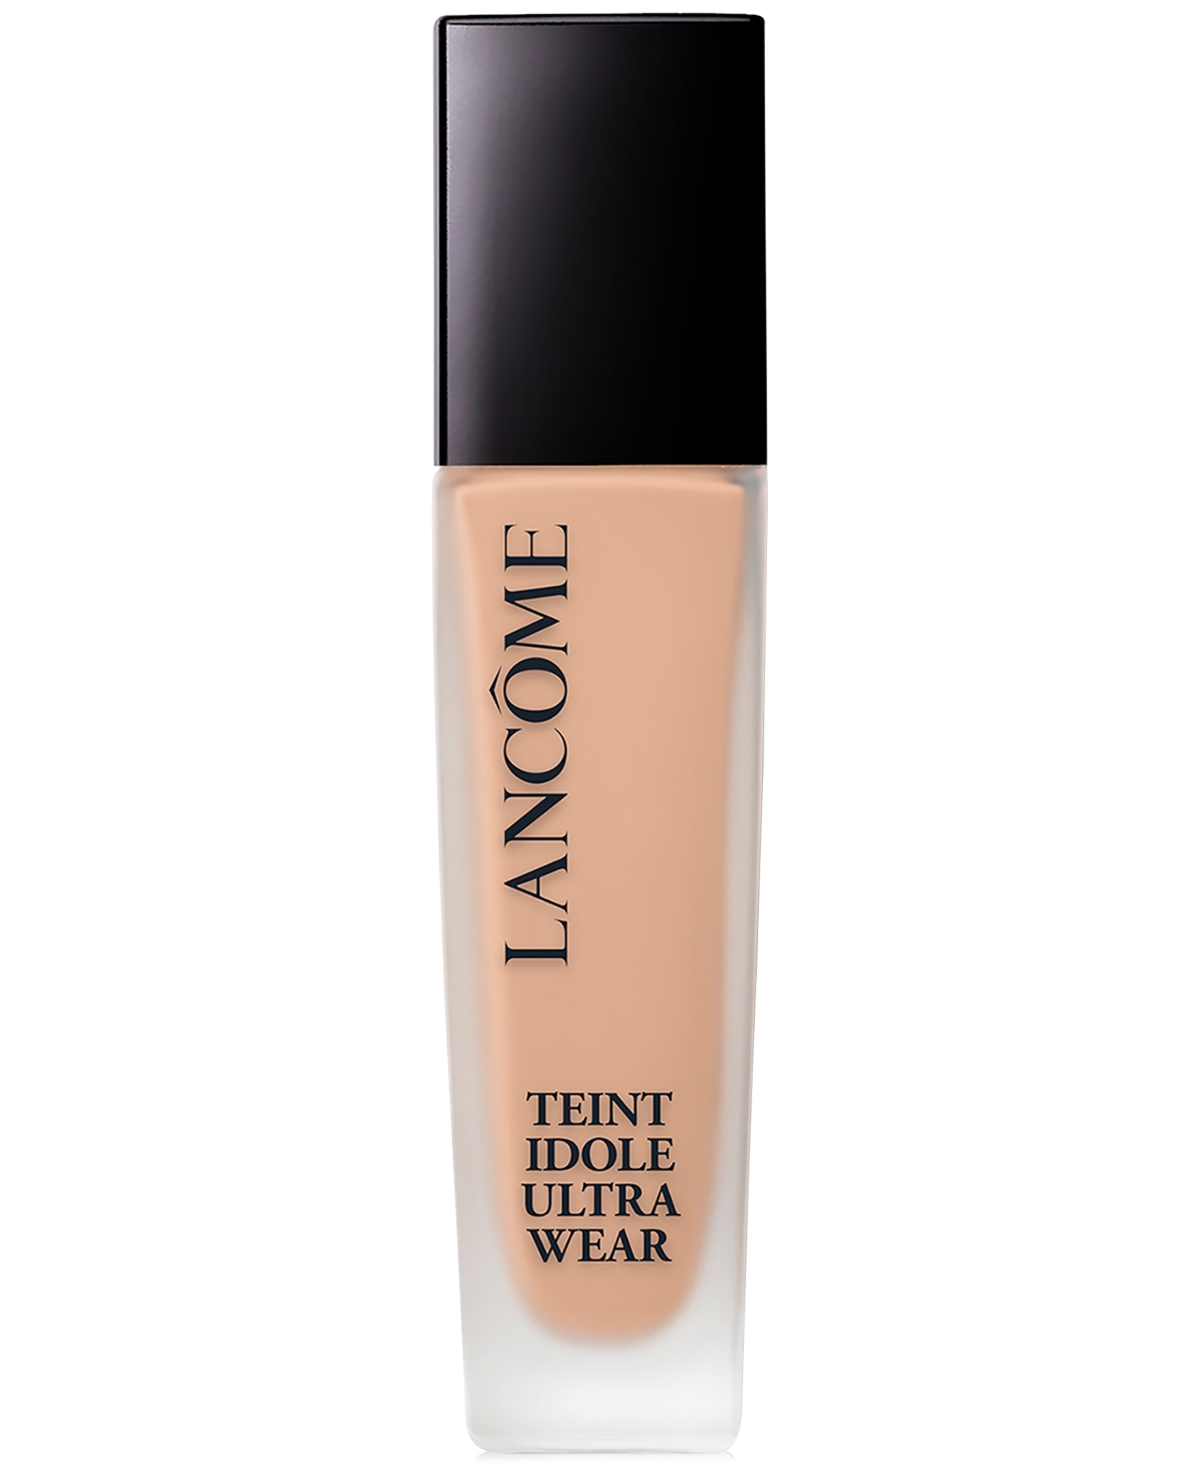 Lancôme Teint Idole Ultra Wear Foundation In C - Light Skin With Cool,pinky Undertone